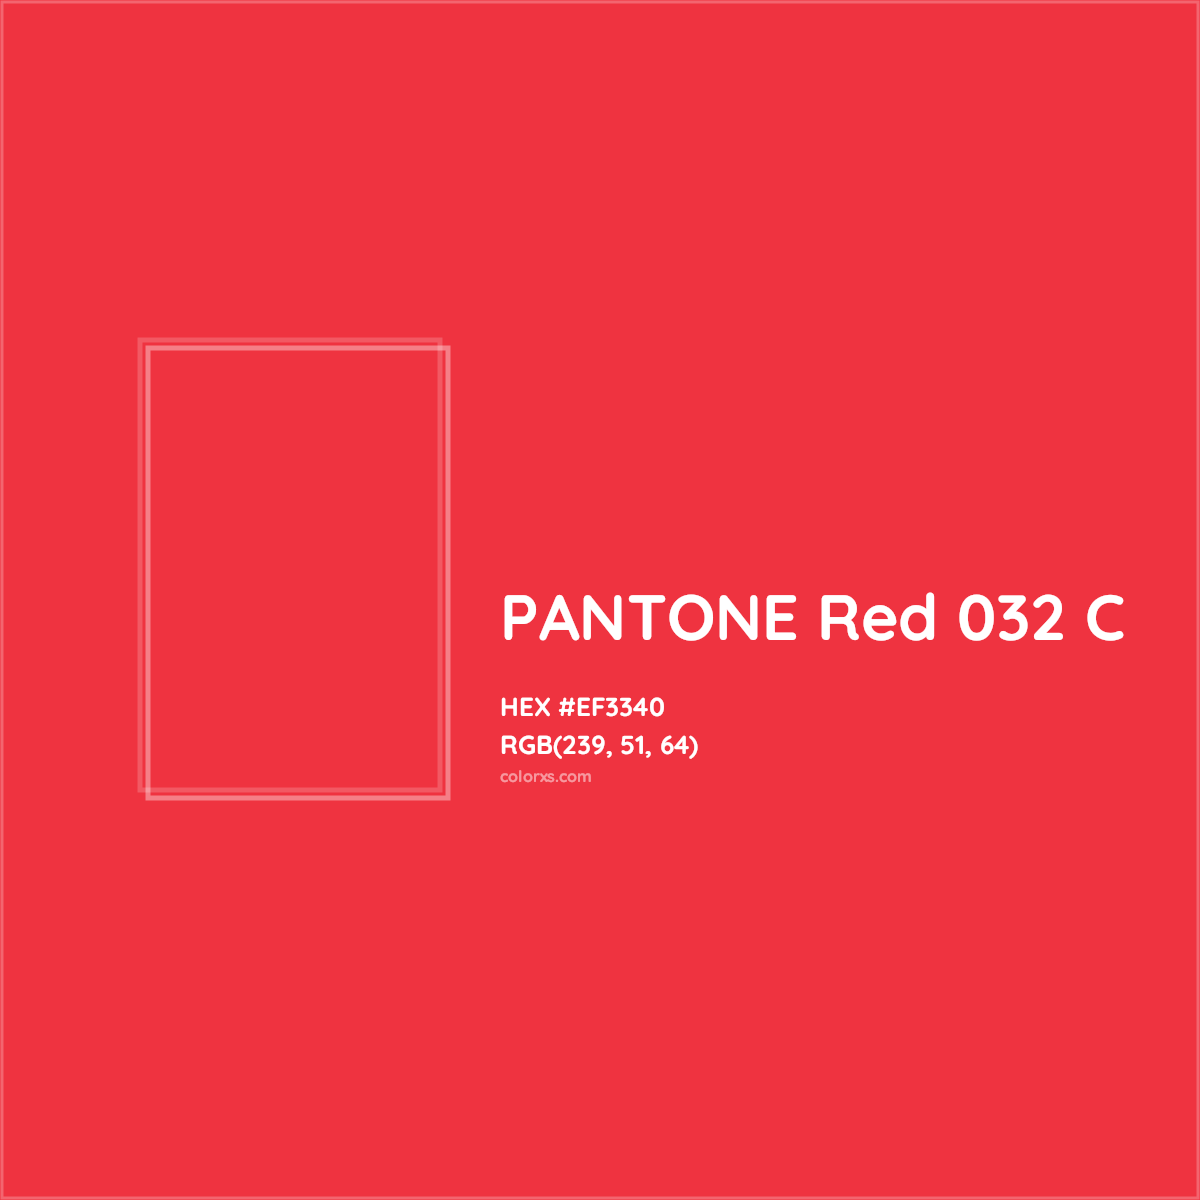 sådan Bordenden legemliggøre About PANTONE Red 032 C Color - Color codes, similar colors and paints -  colorxs.com